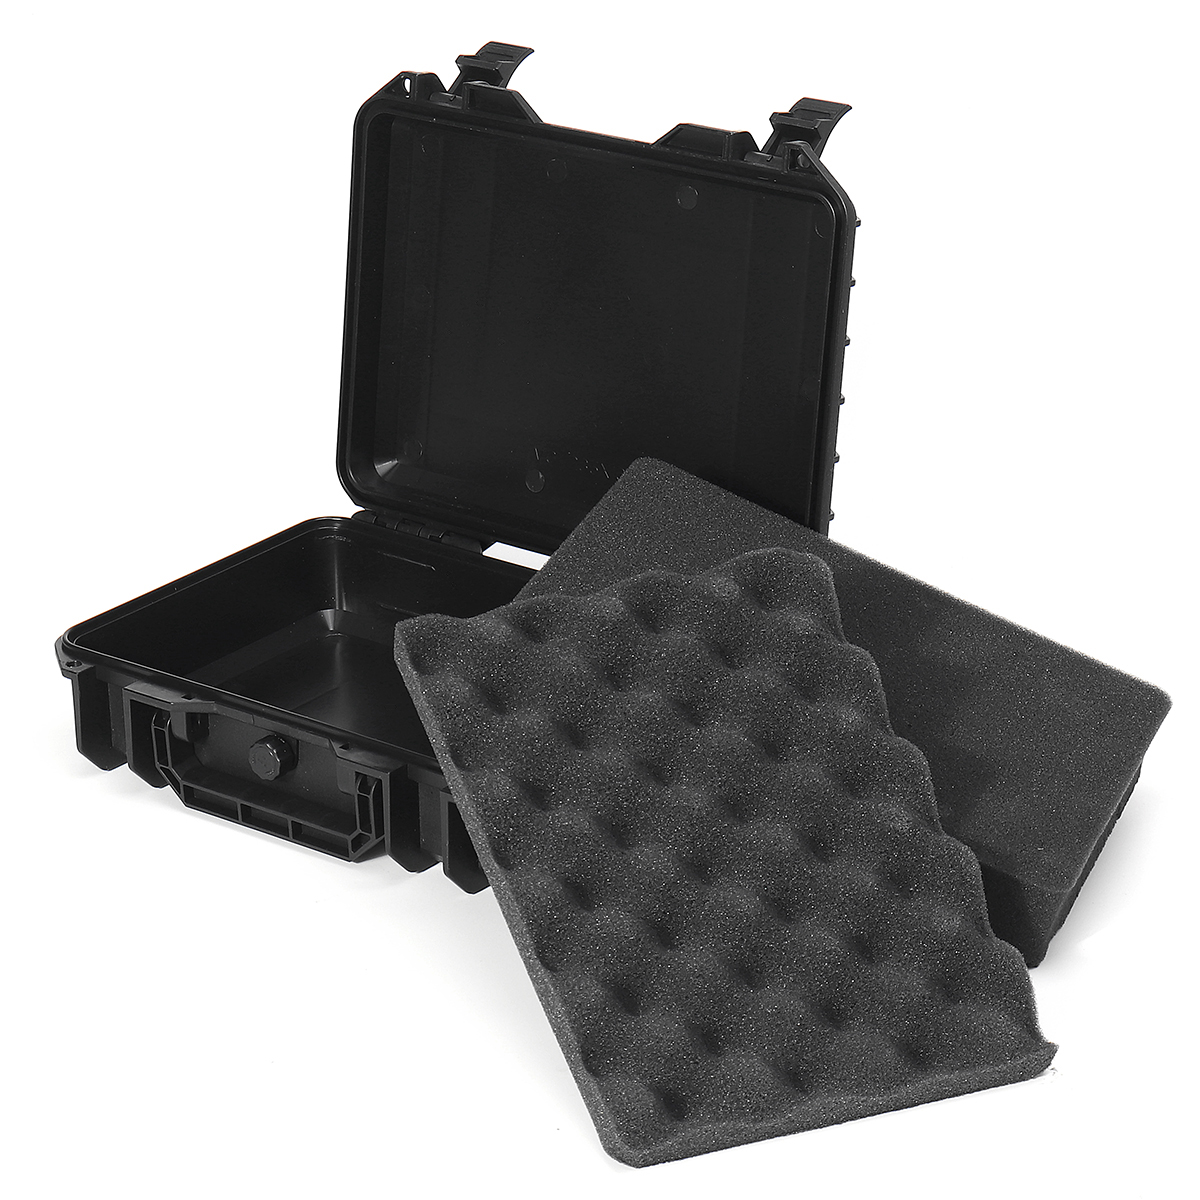 25020074mm-Waterproof-Hand-Carry-Tool-Case-Bag-Storage-Box-Camera-Photography-w-Sponge-1648371-1